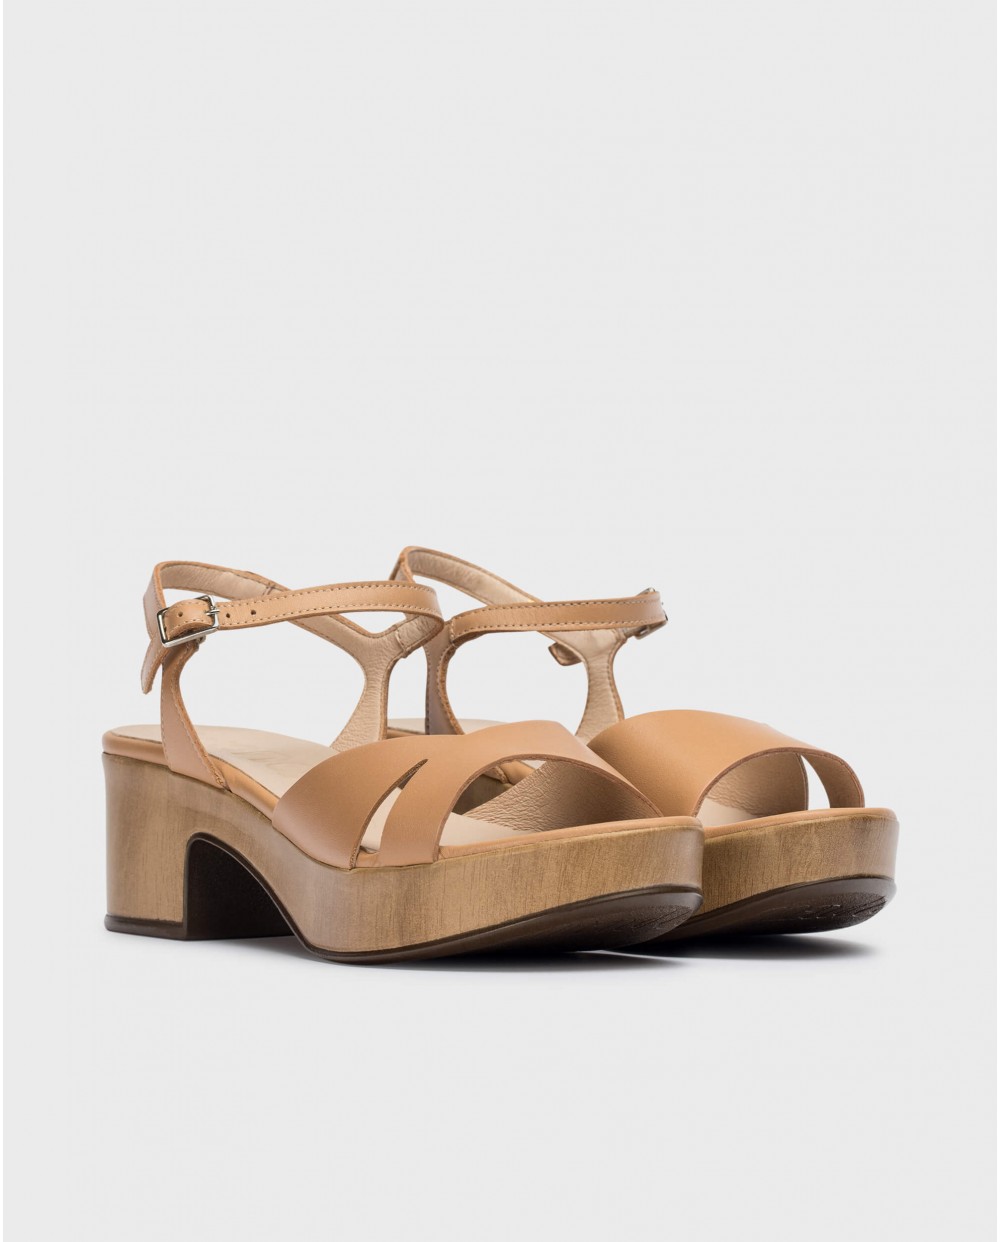 Sand Griñón heeled sandals